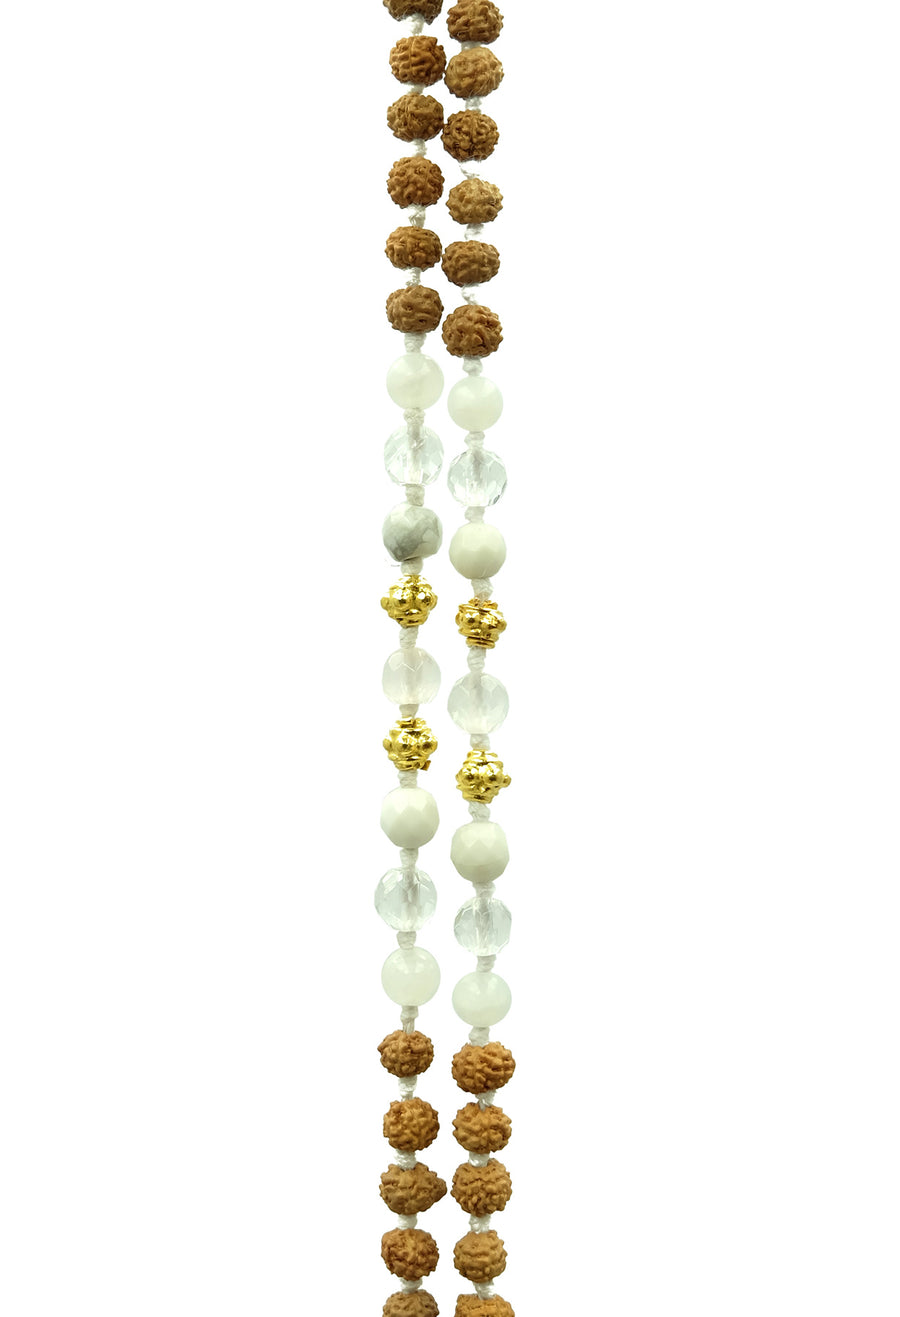 Divine Luminary is a choker length necklace handmade by balimalas.com from rudraksha seeds, quartz crystal, howlite beads and a howlite pendant.